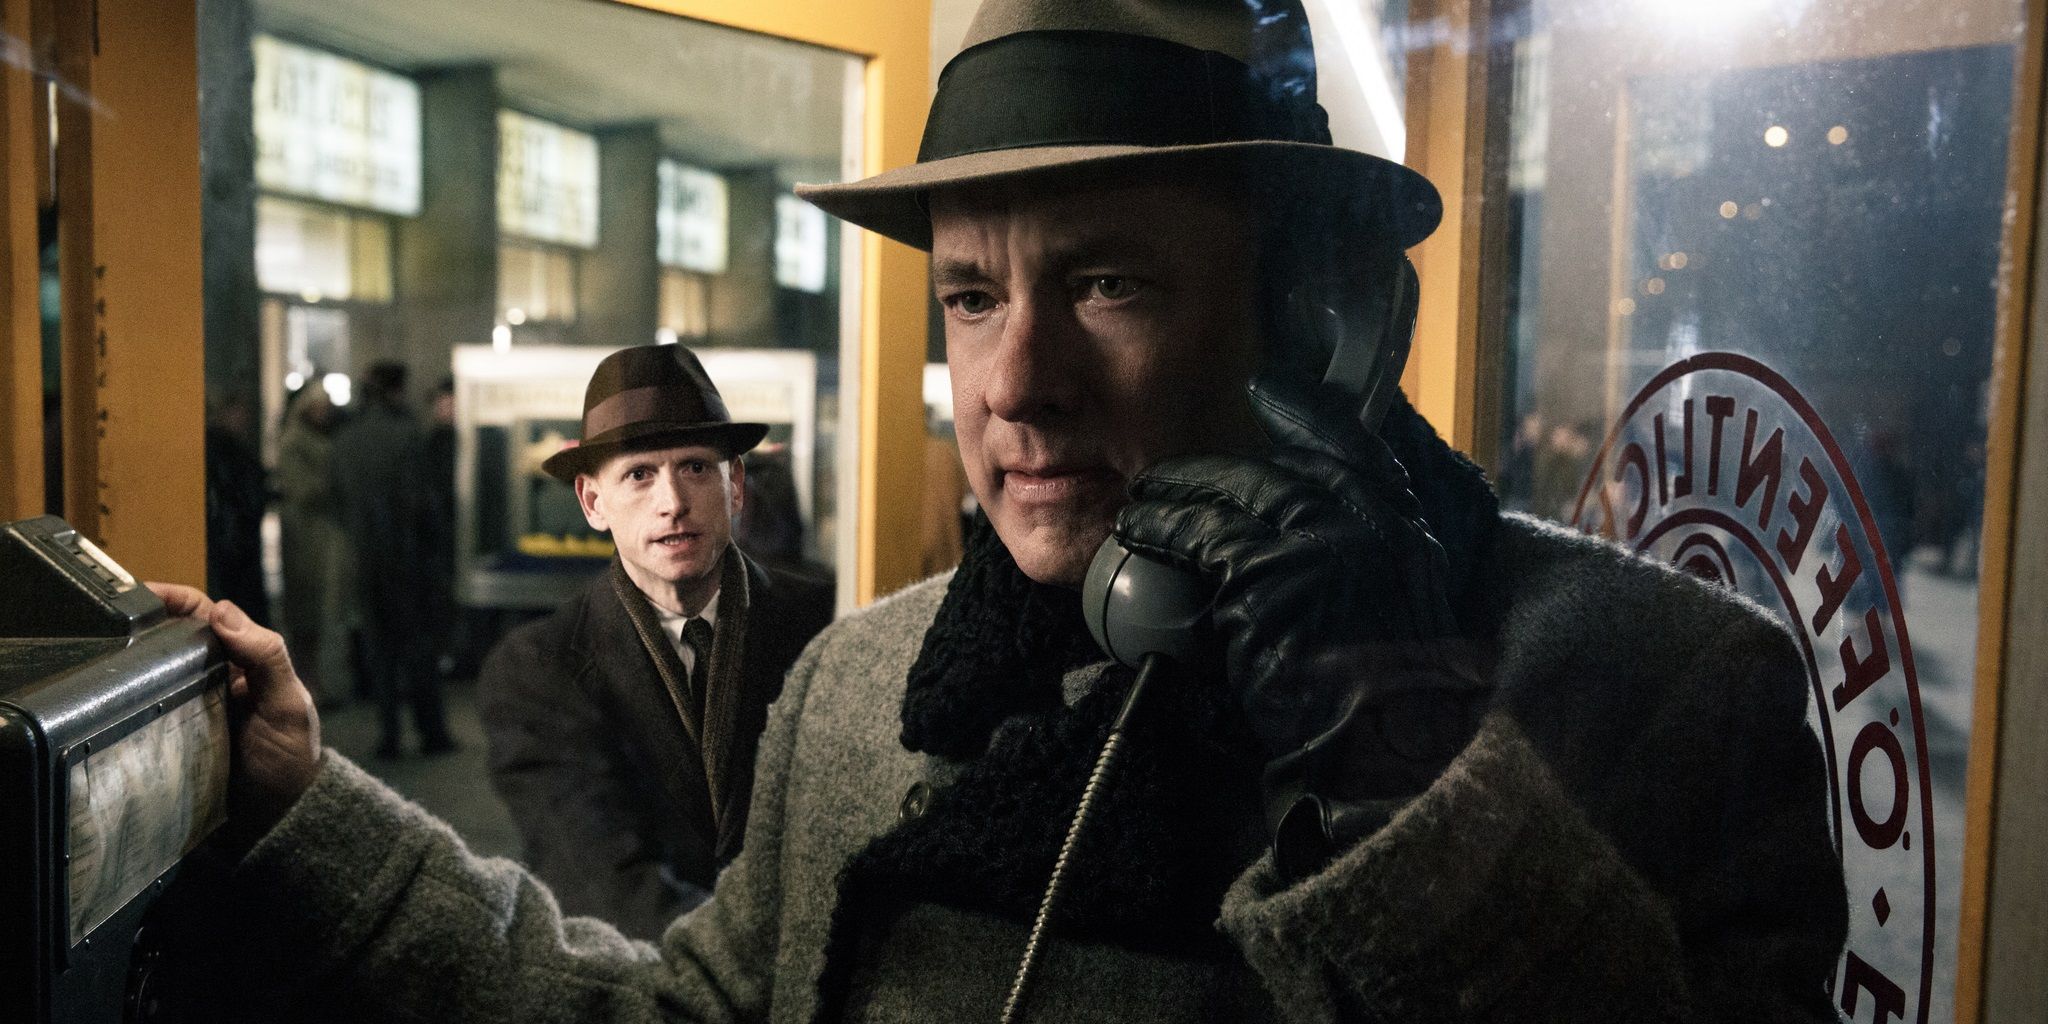 Tom Hanks using a pay phone in Bridge of Spies